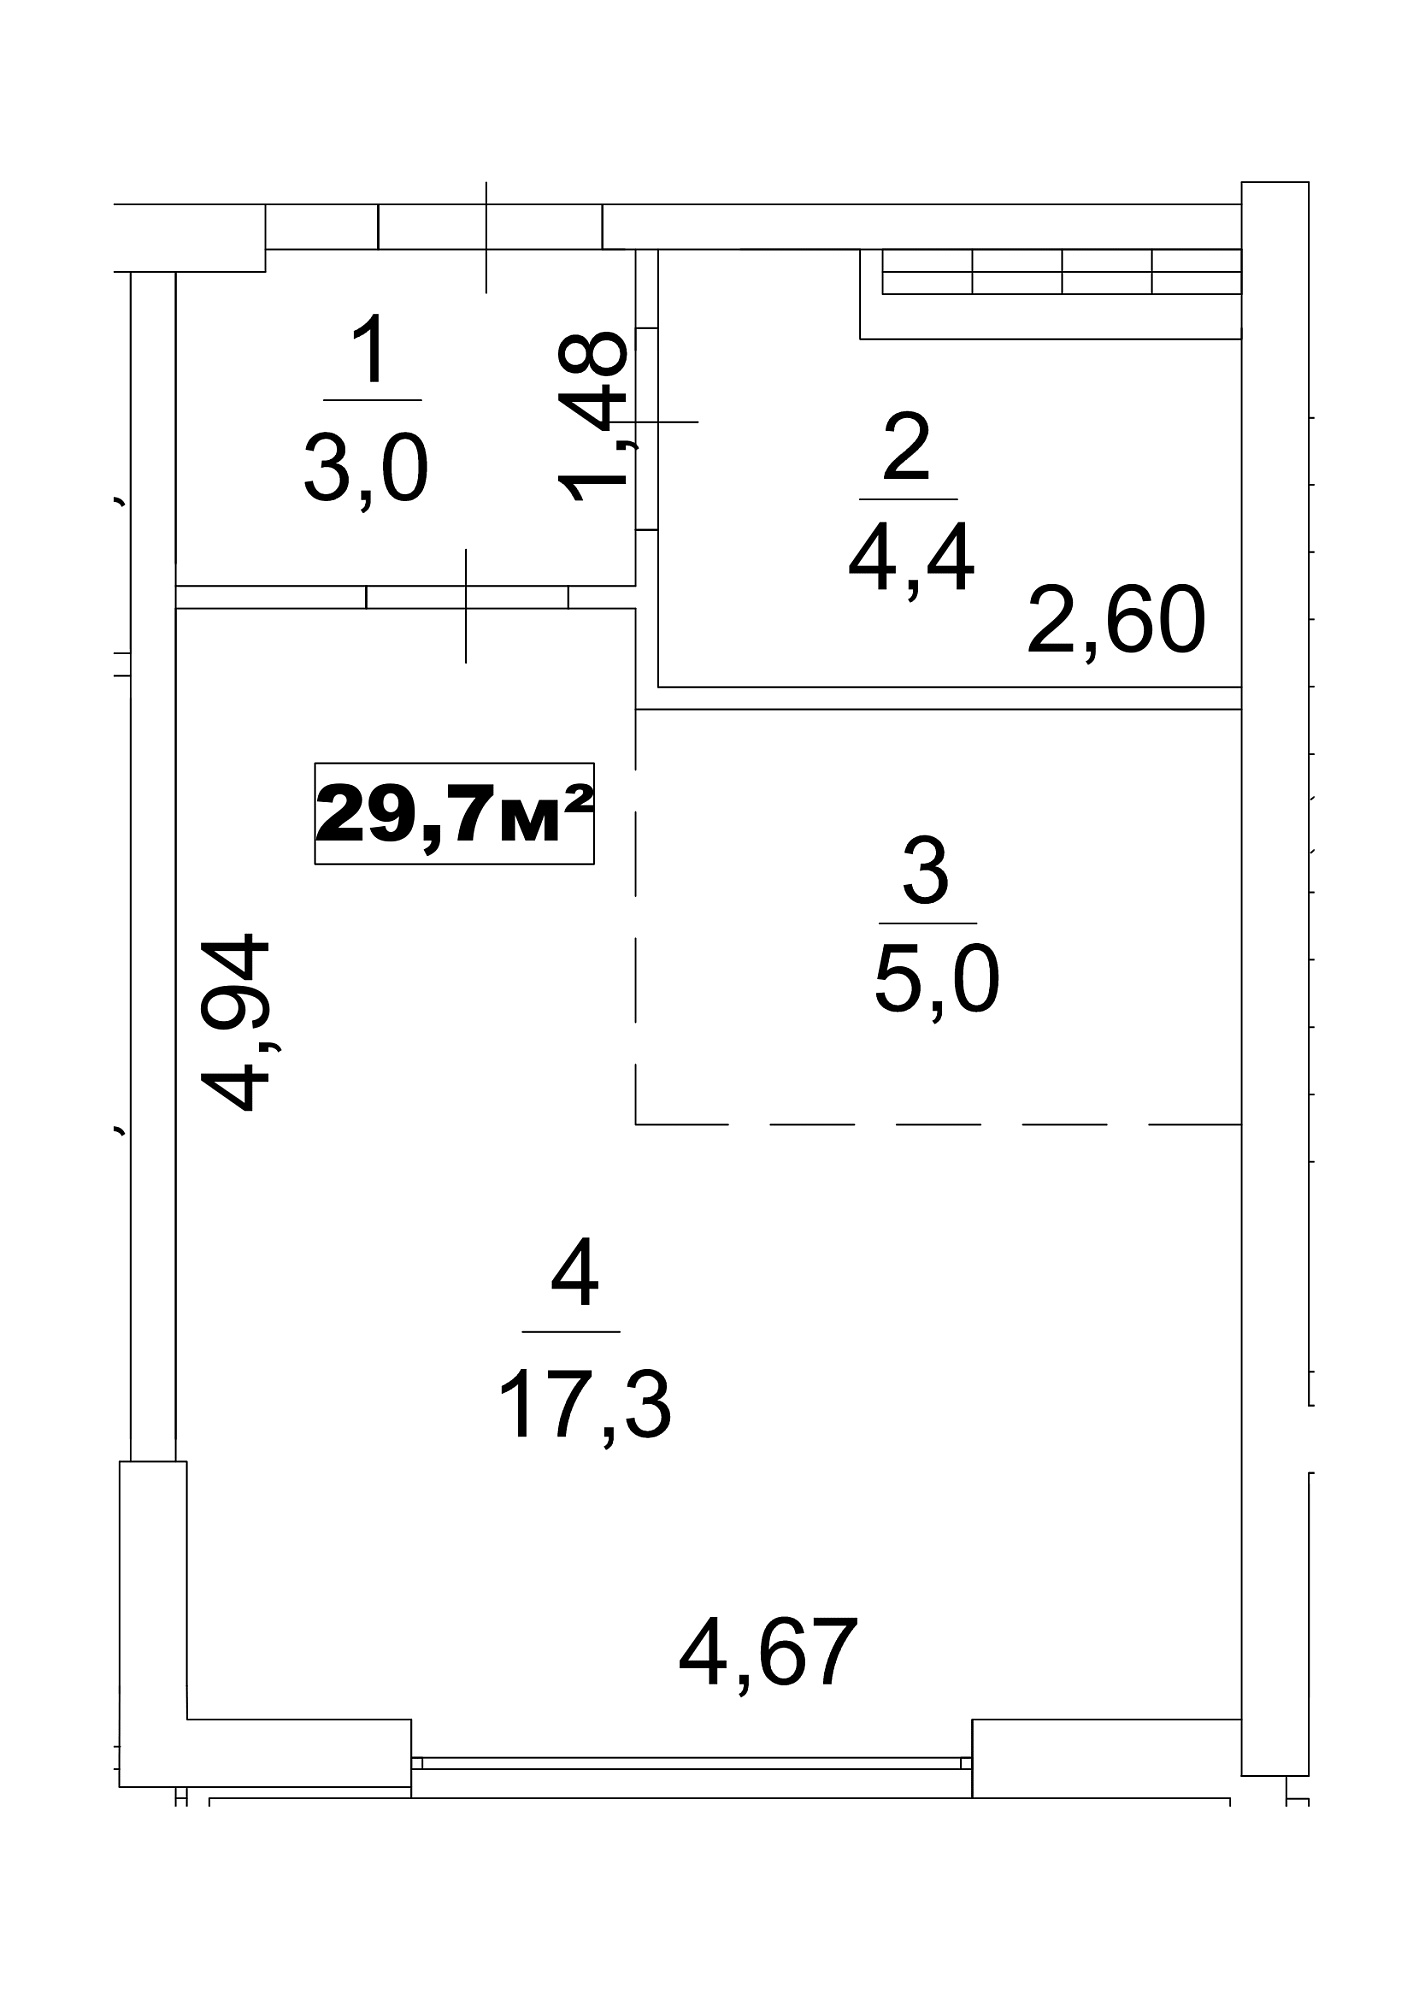 Planning Smart flats area 29.7m2, AB-13-01/00001.